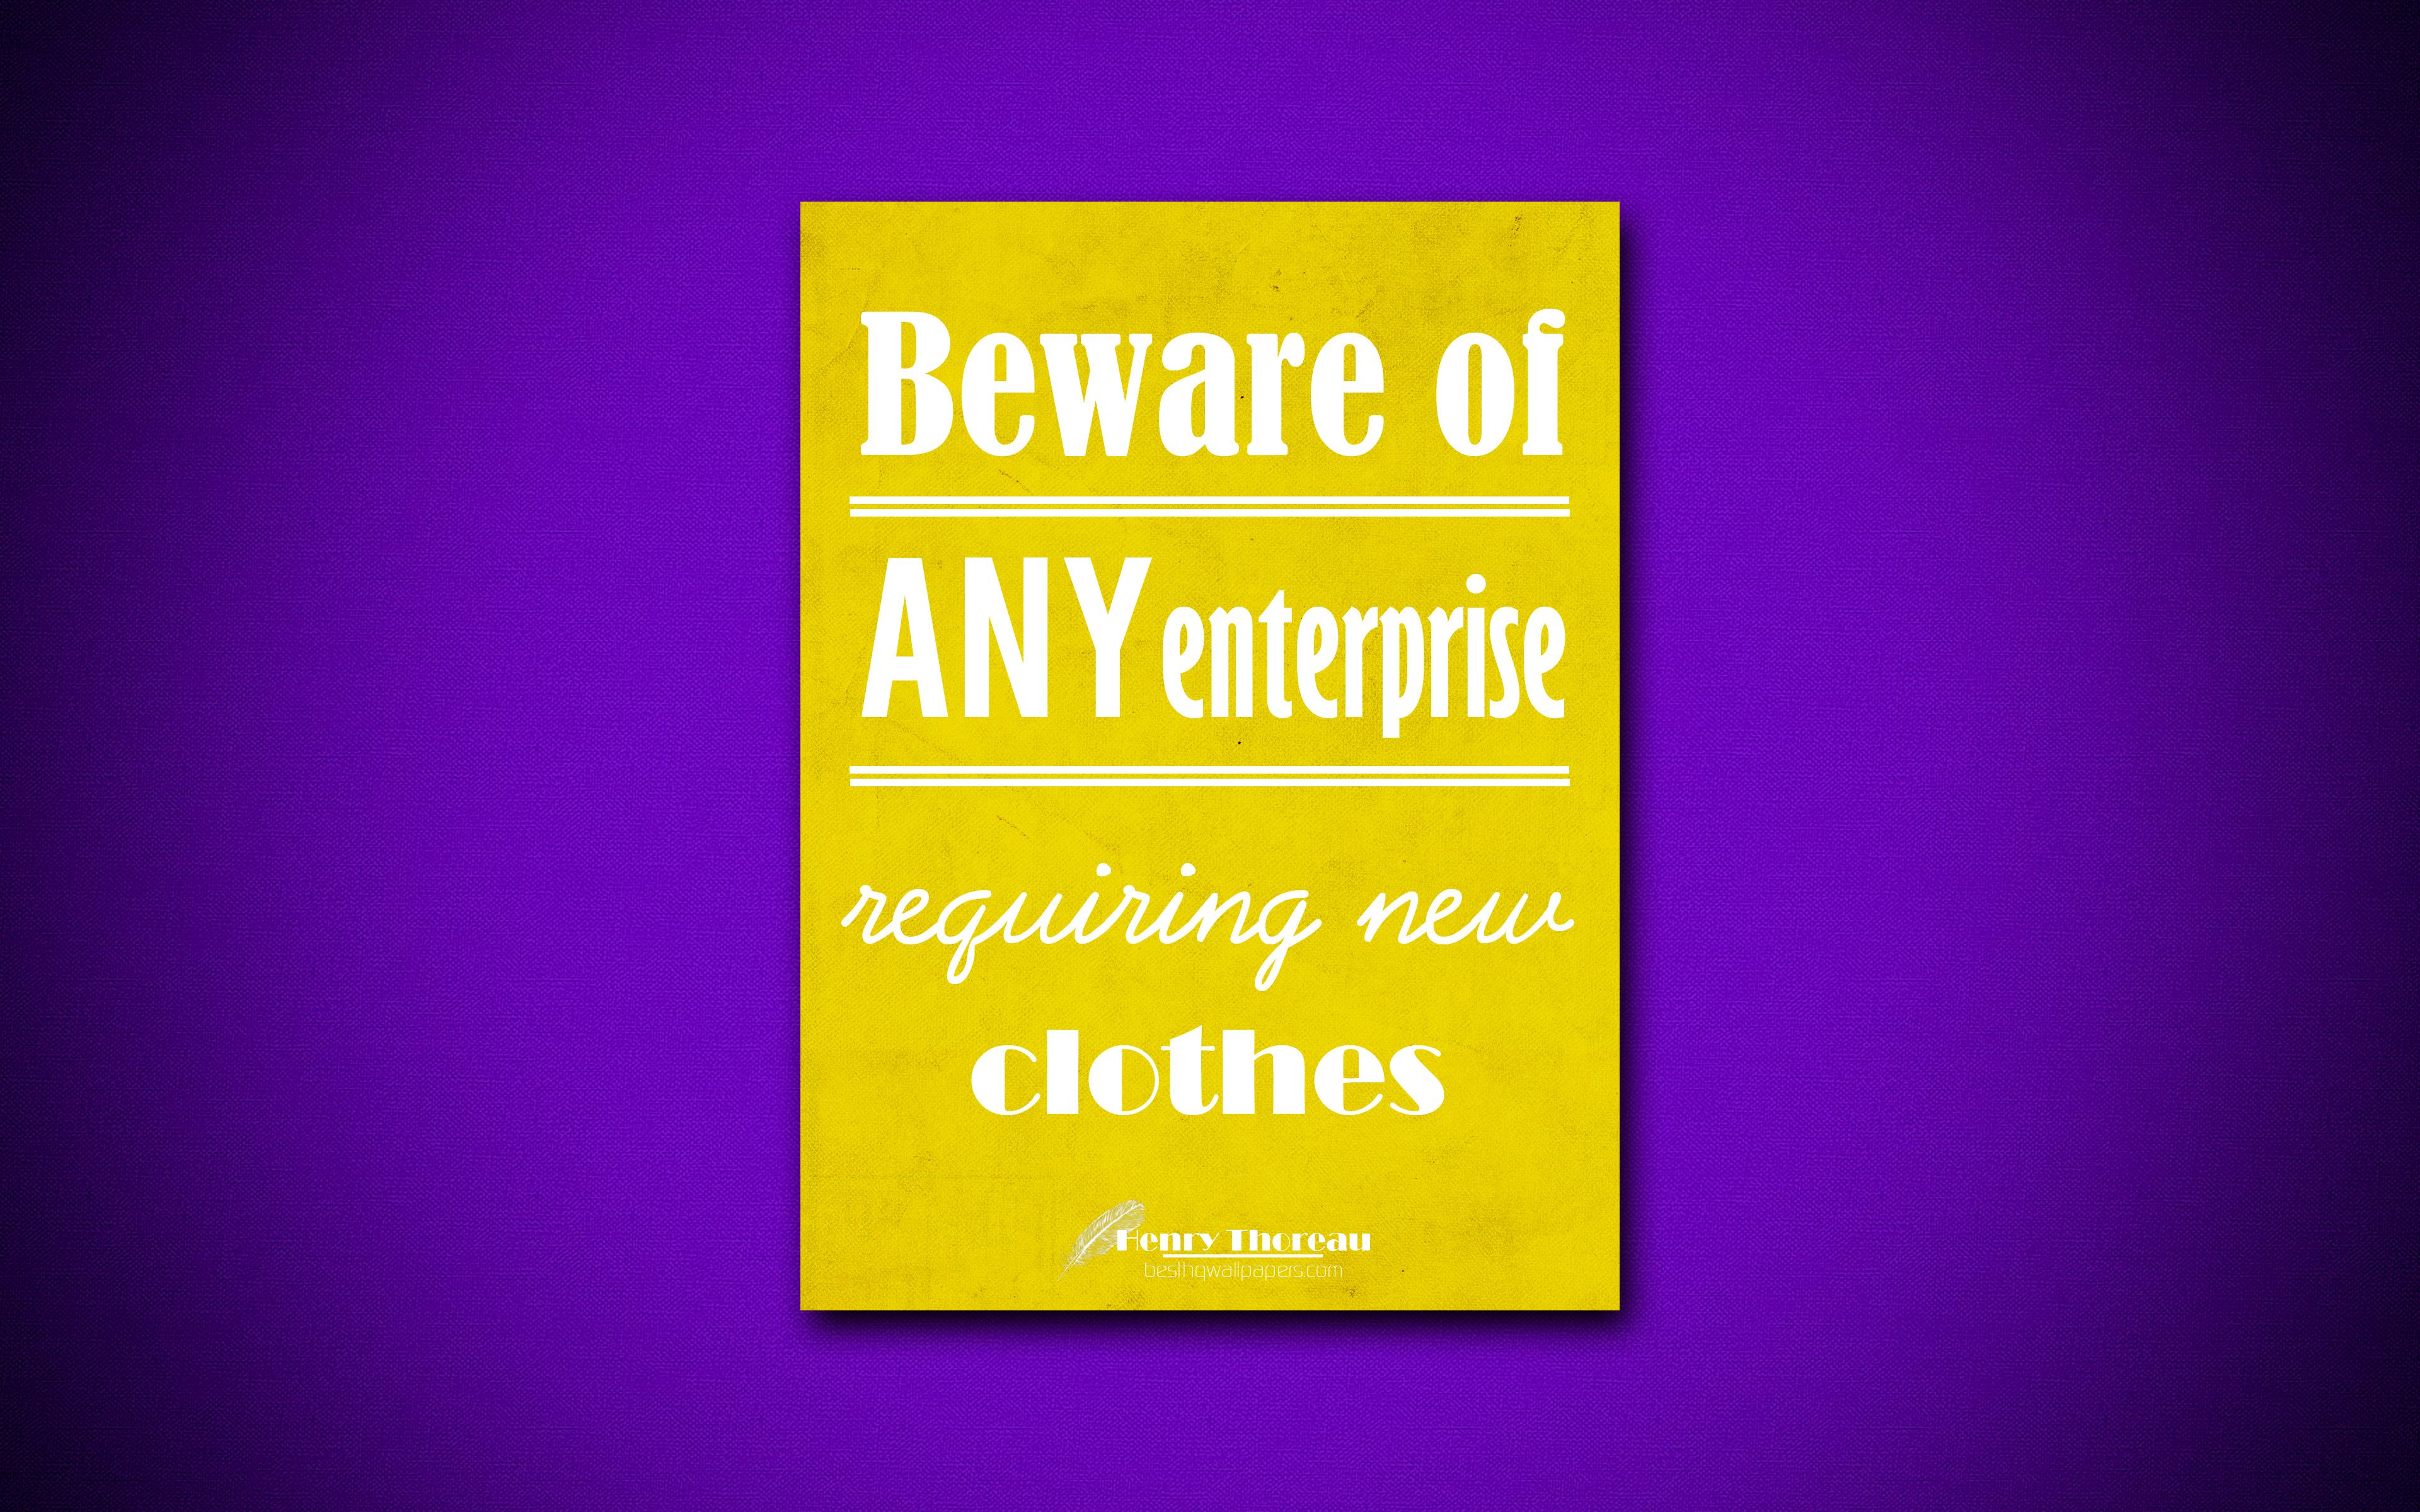 Download wallpaper Beware of any enterprise requiring new